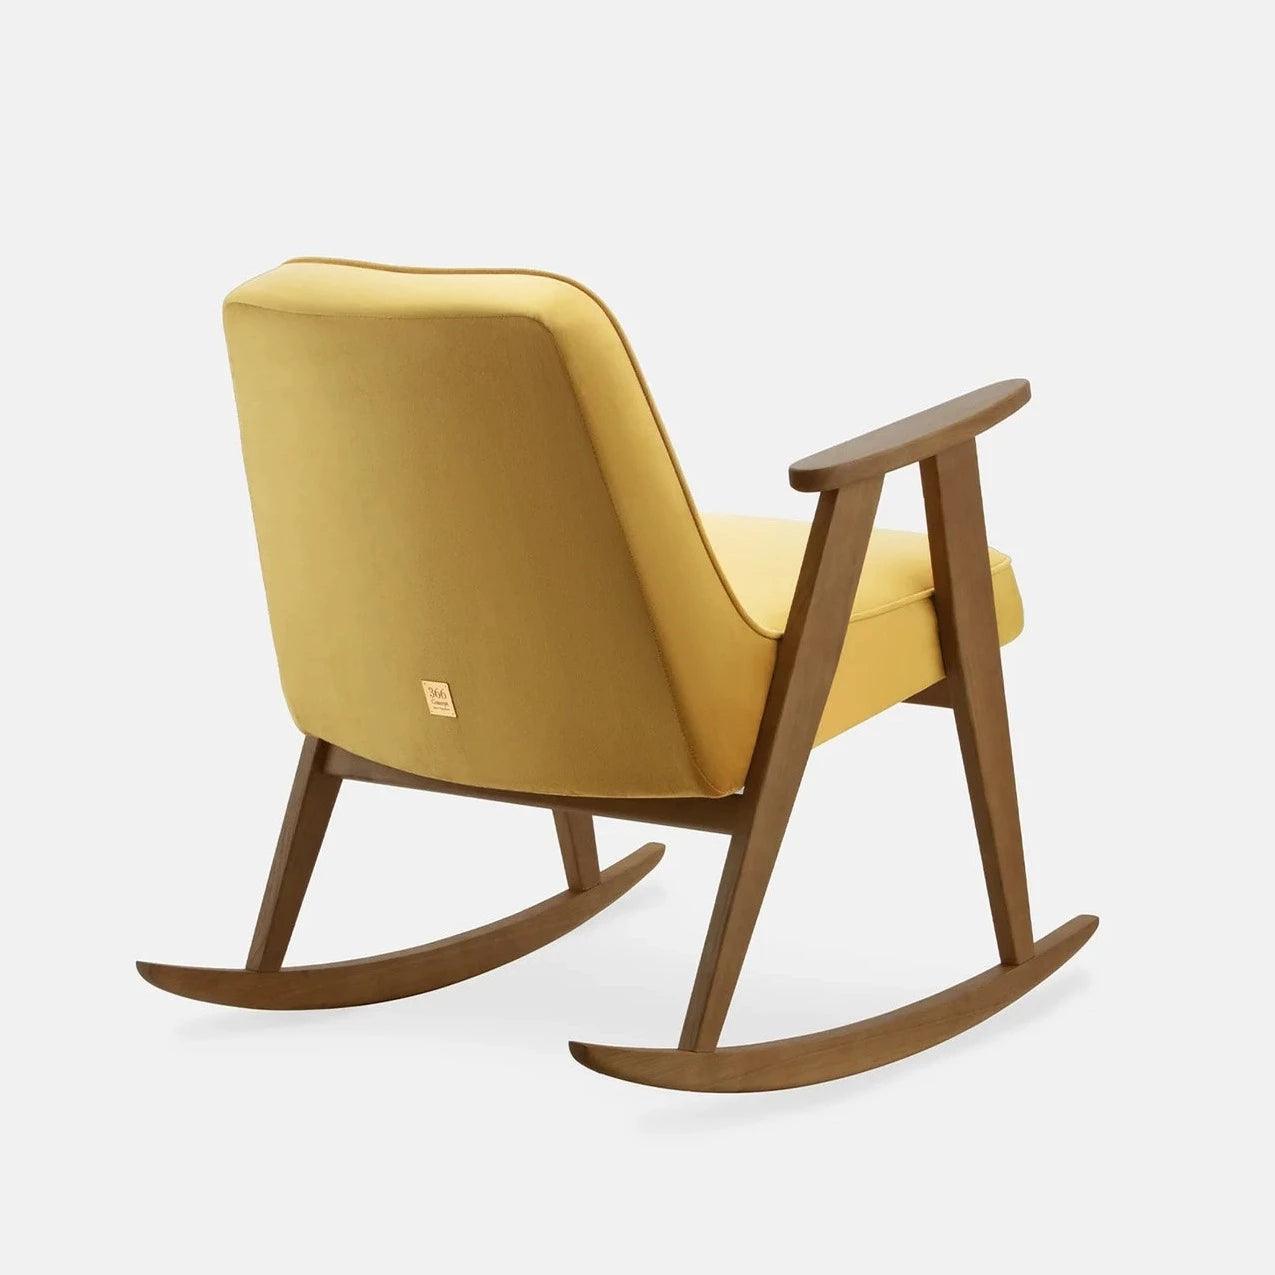 Fotel bujany 366 żółty w tkaninie Shine Velvet Mustard 366 concept    Eye on Design